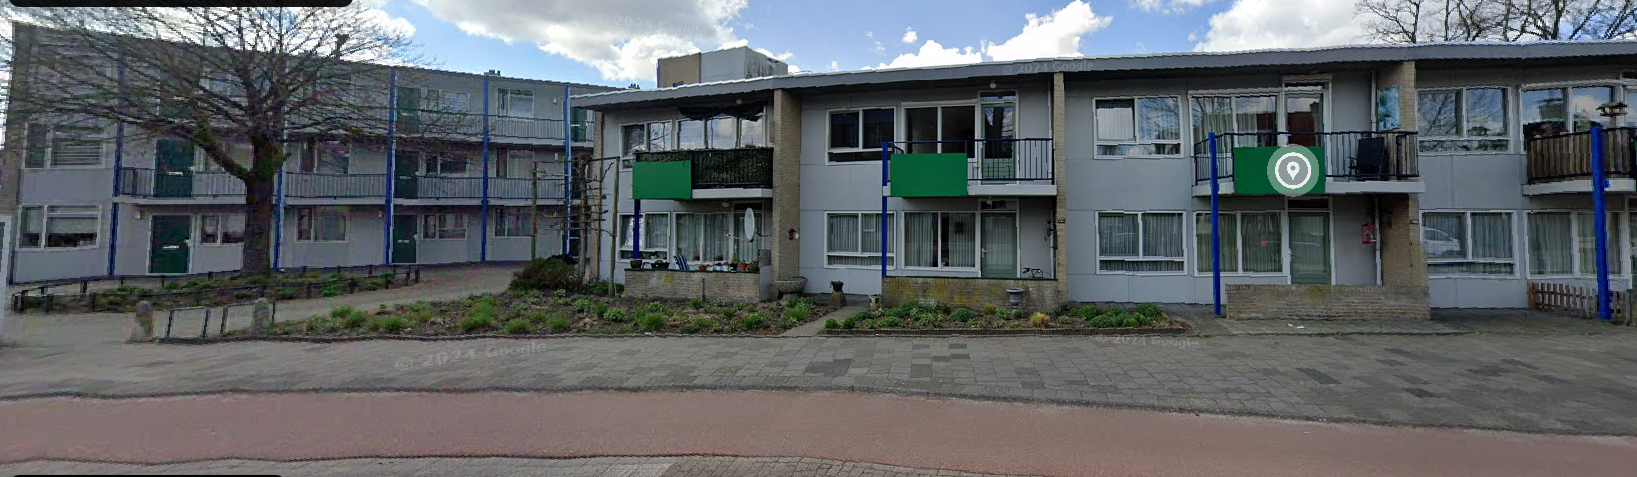 't Hofke 130, 5641 AN Eindhoven, Nederland